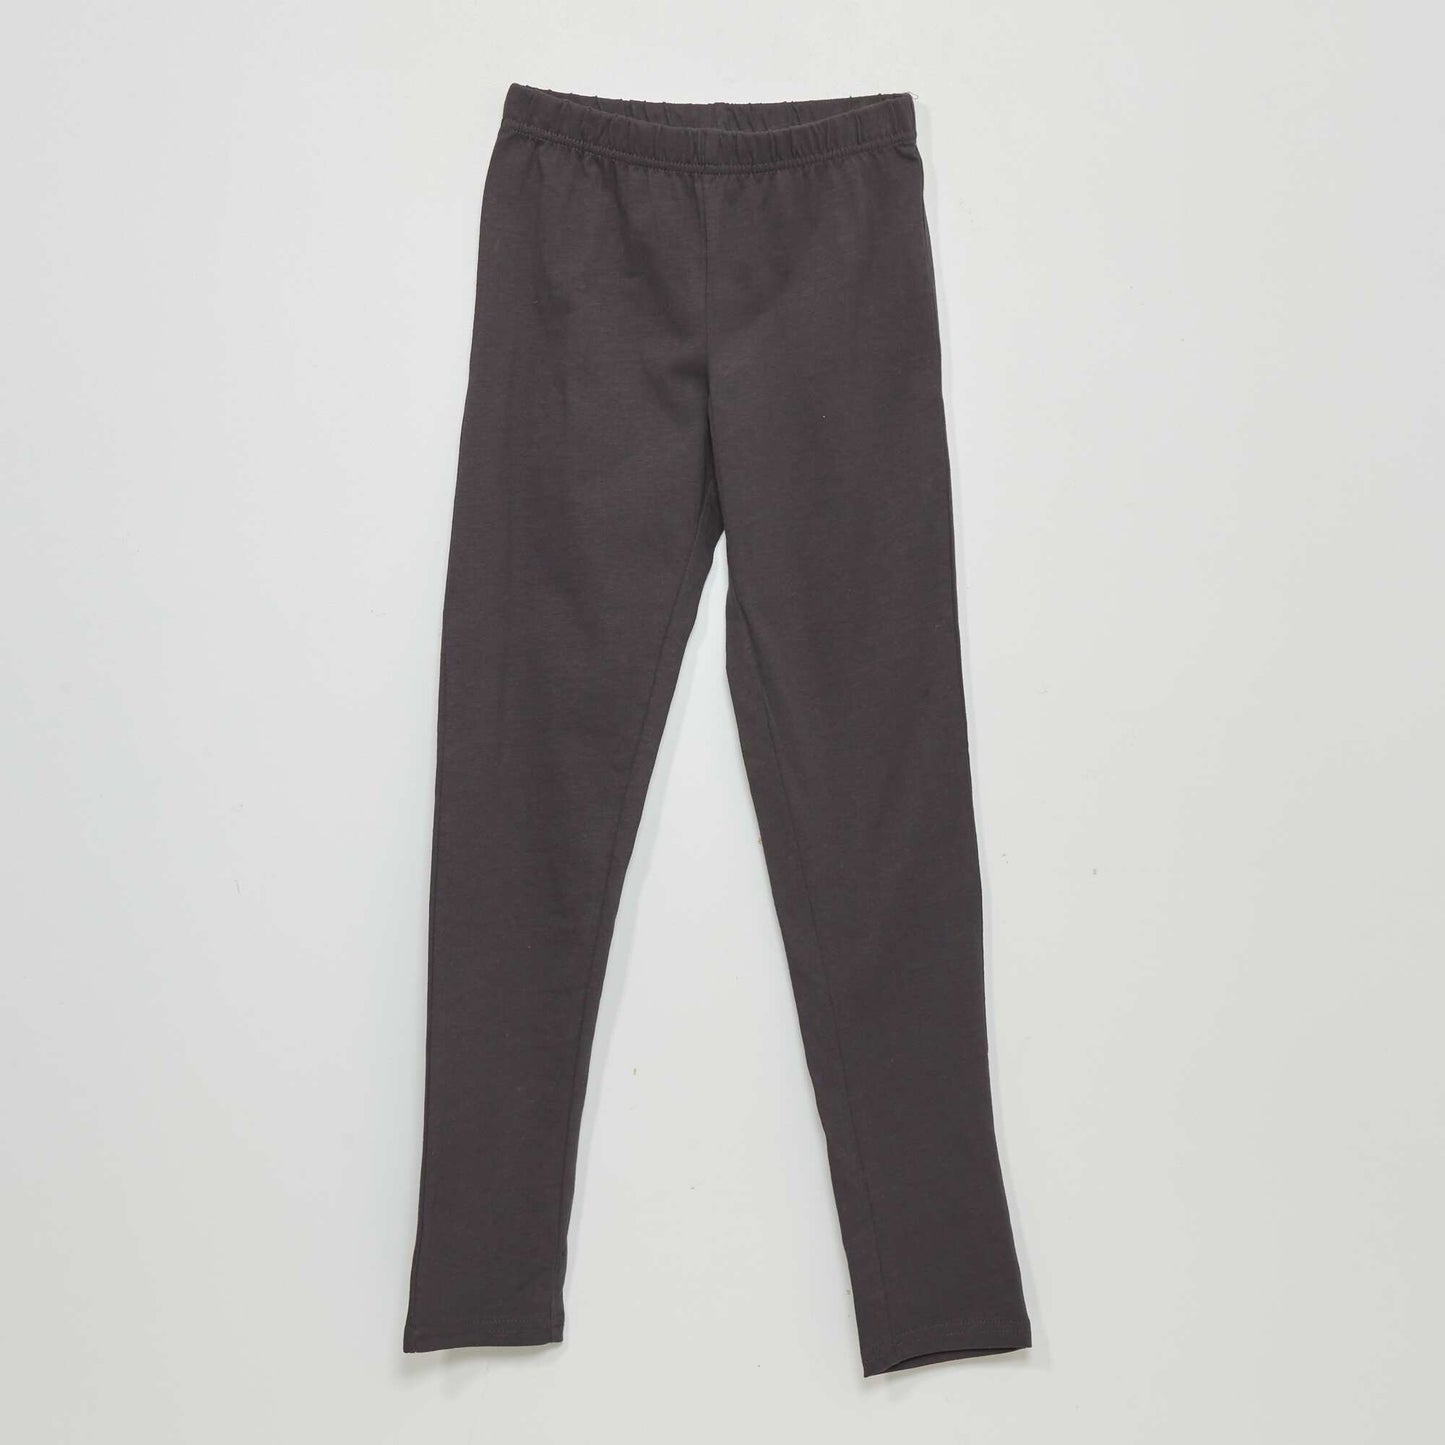 Ensemble pyjama t-shirt + pantalon - 2 pièces Marron/gris